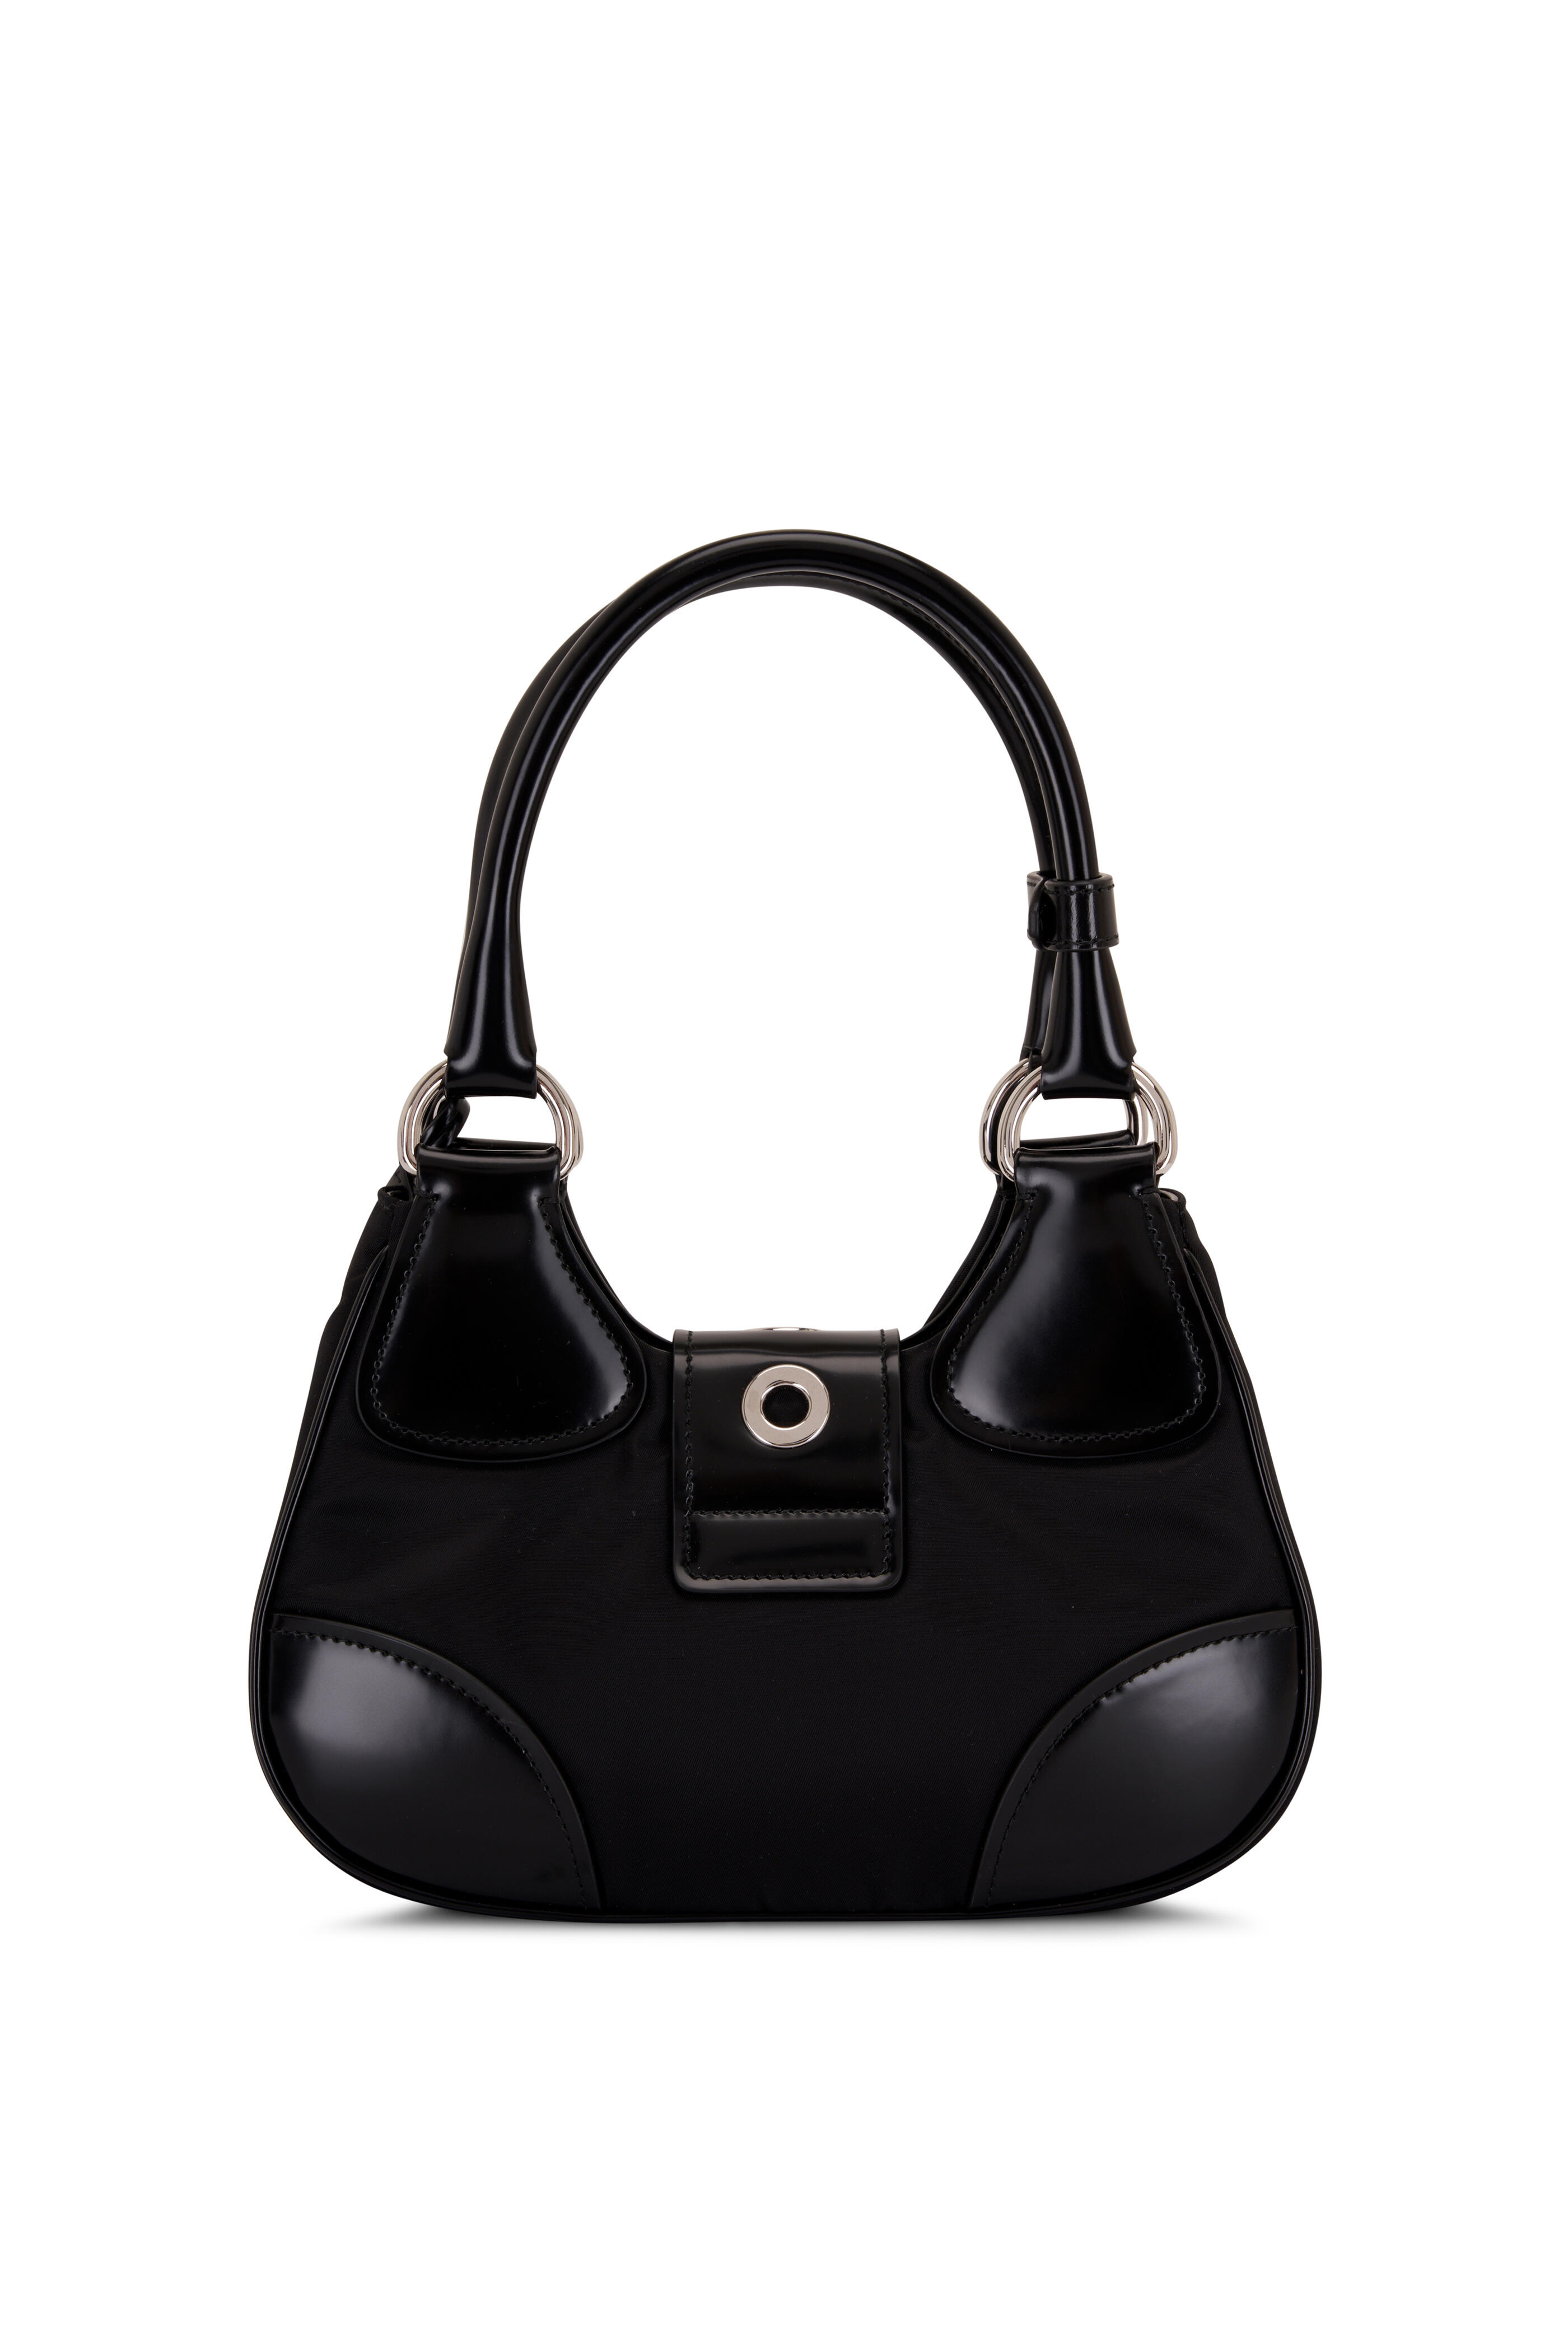 Prada Women's Black Saffiano Leather Zip Pouch Shoulder Bag | by Mitchell Stores